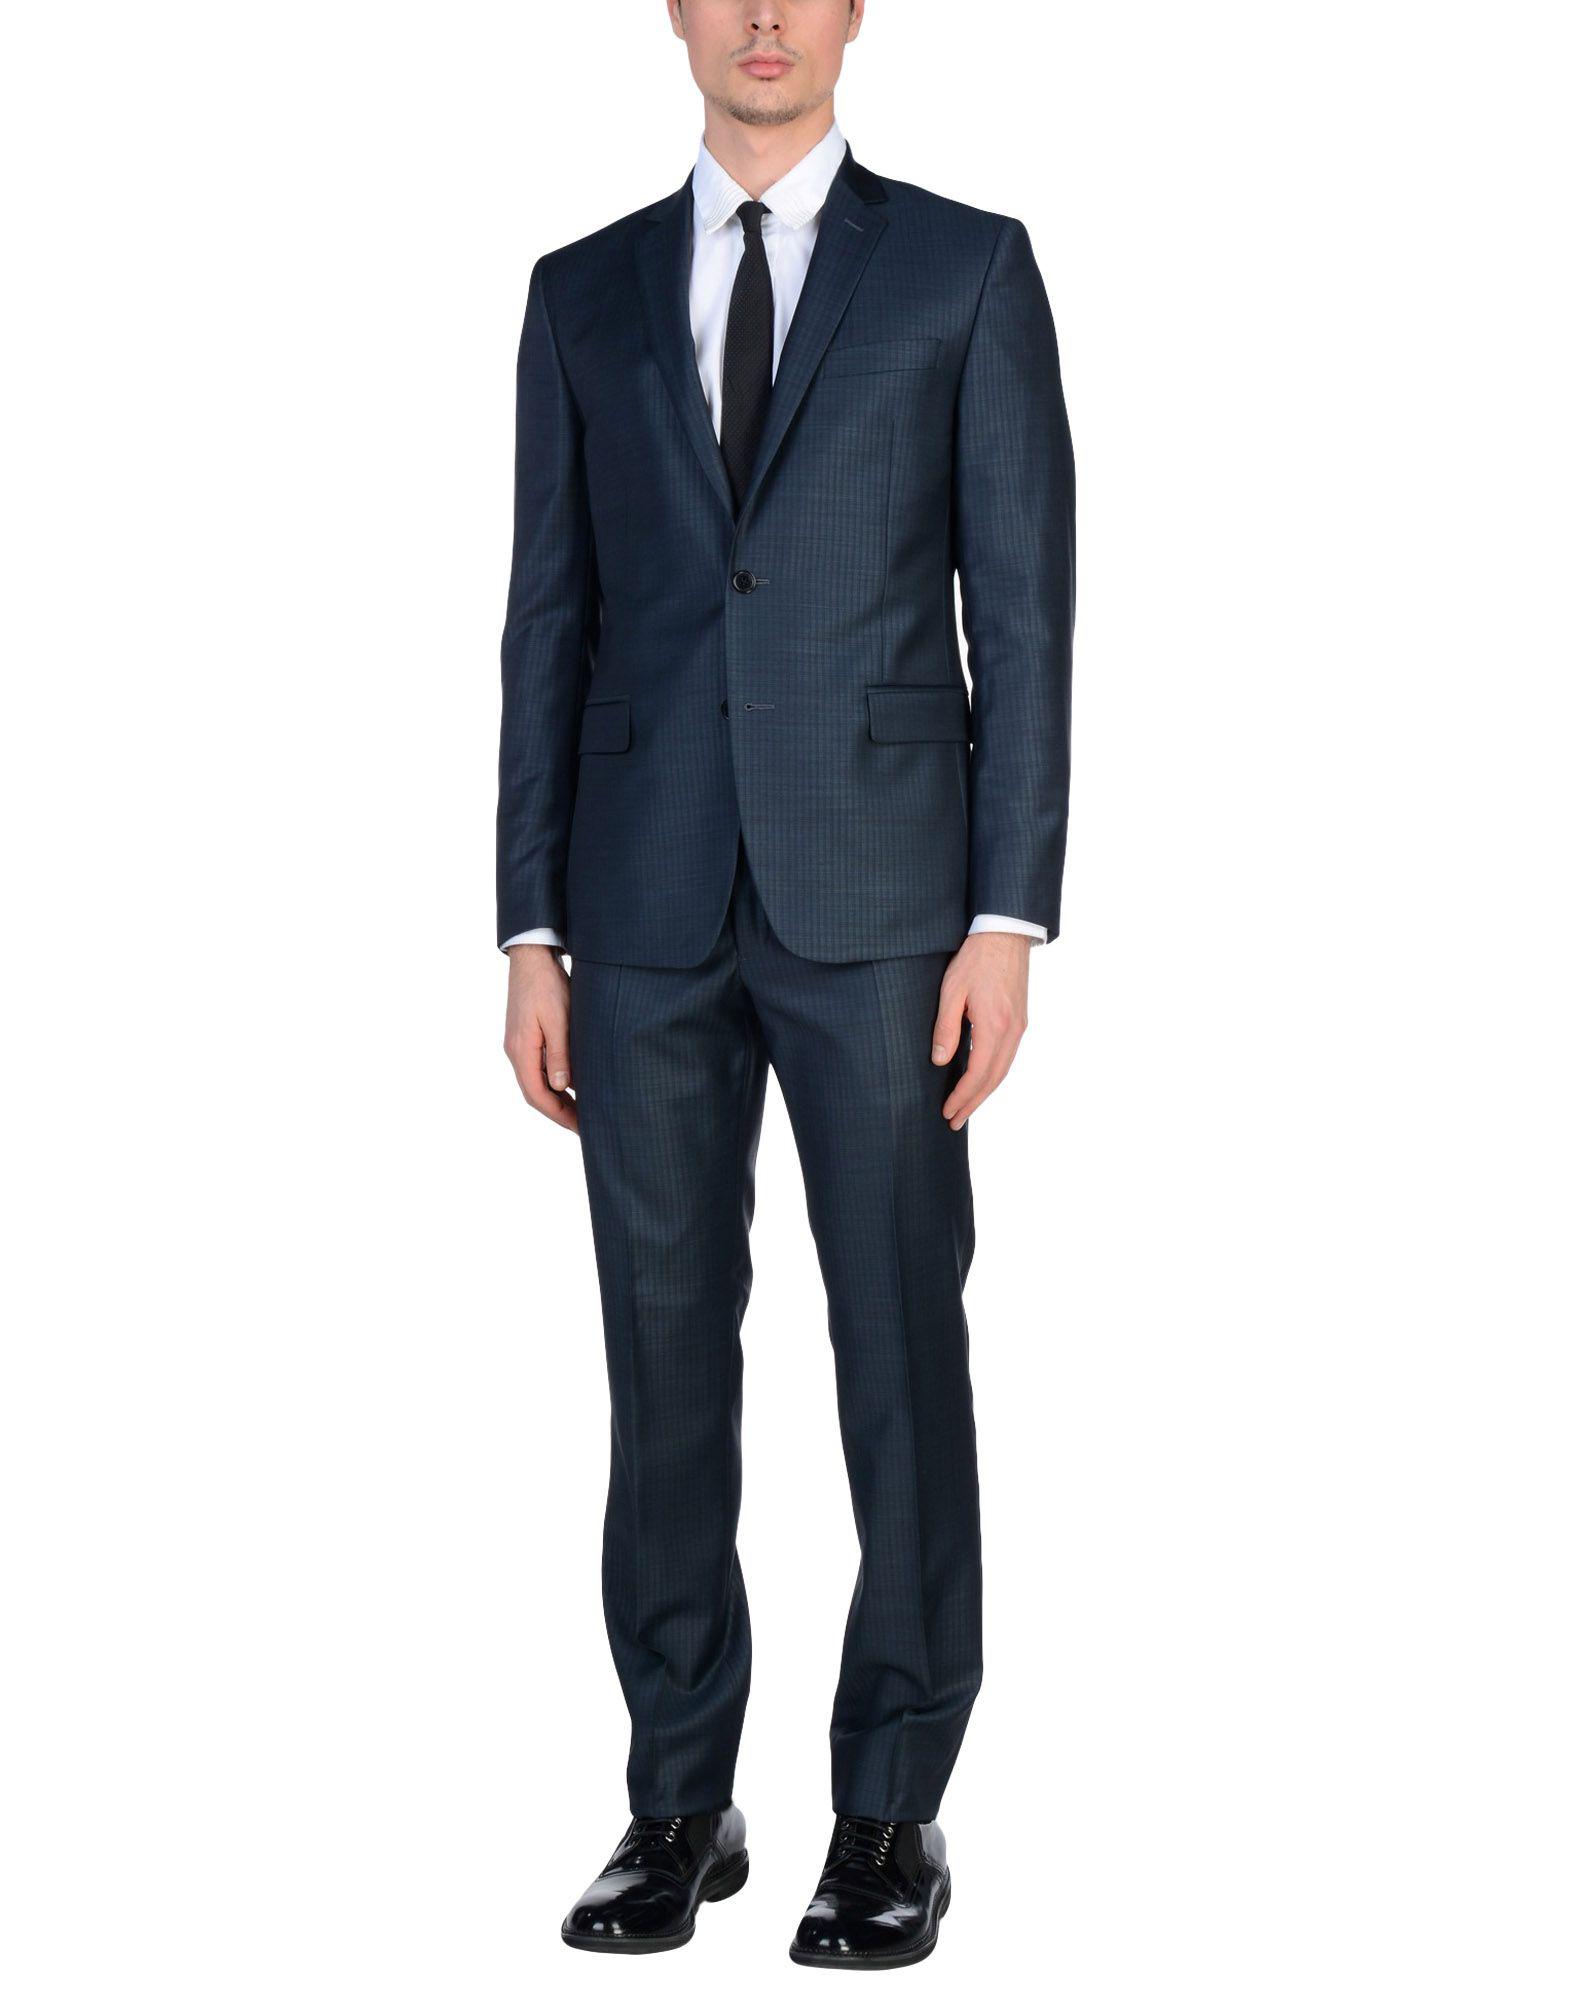 Lyst - Versace Suit in Blue for Men